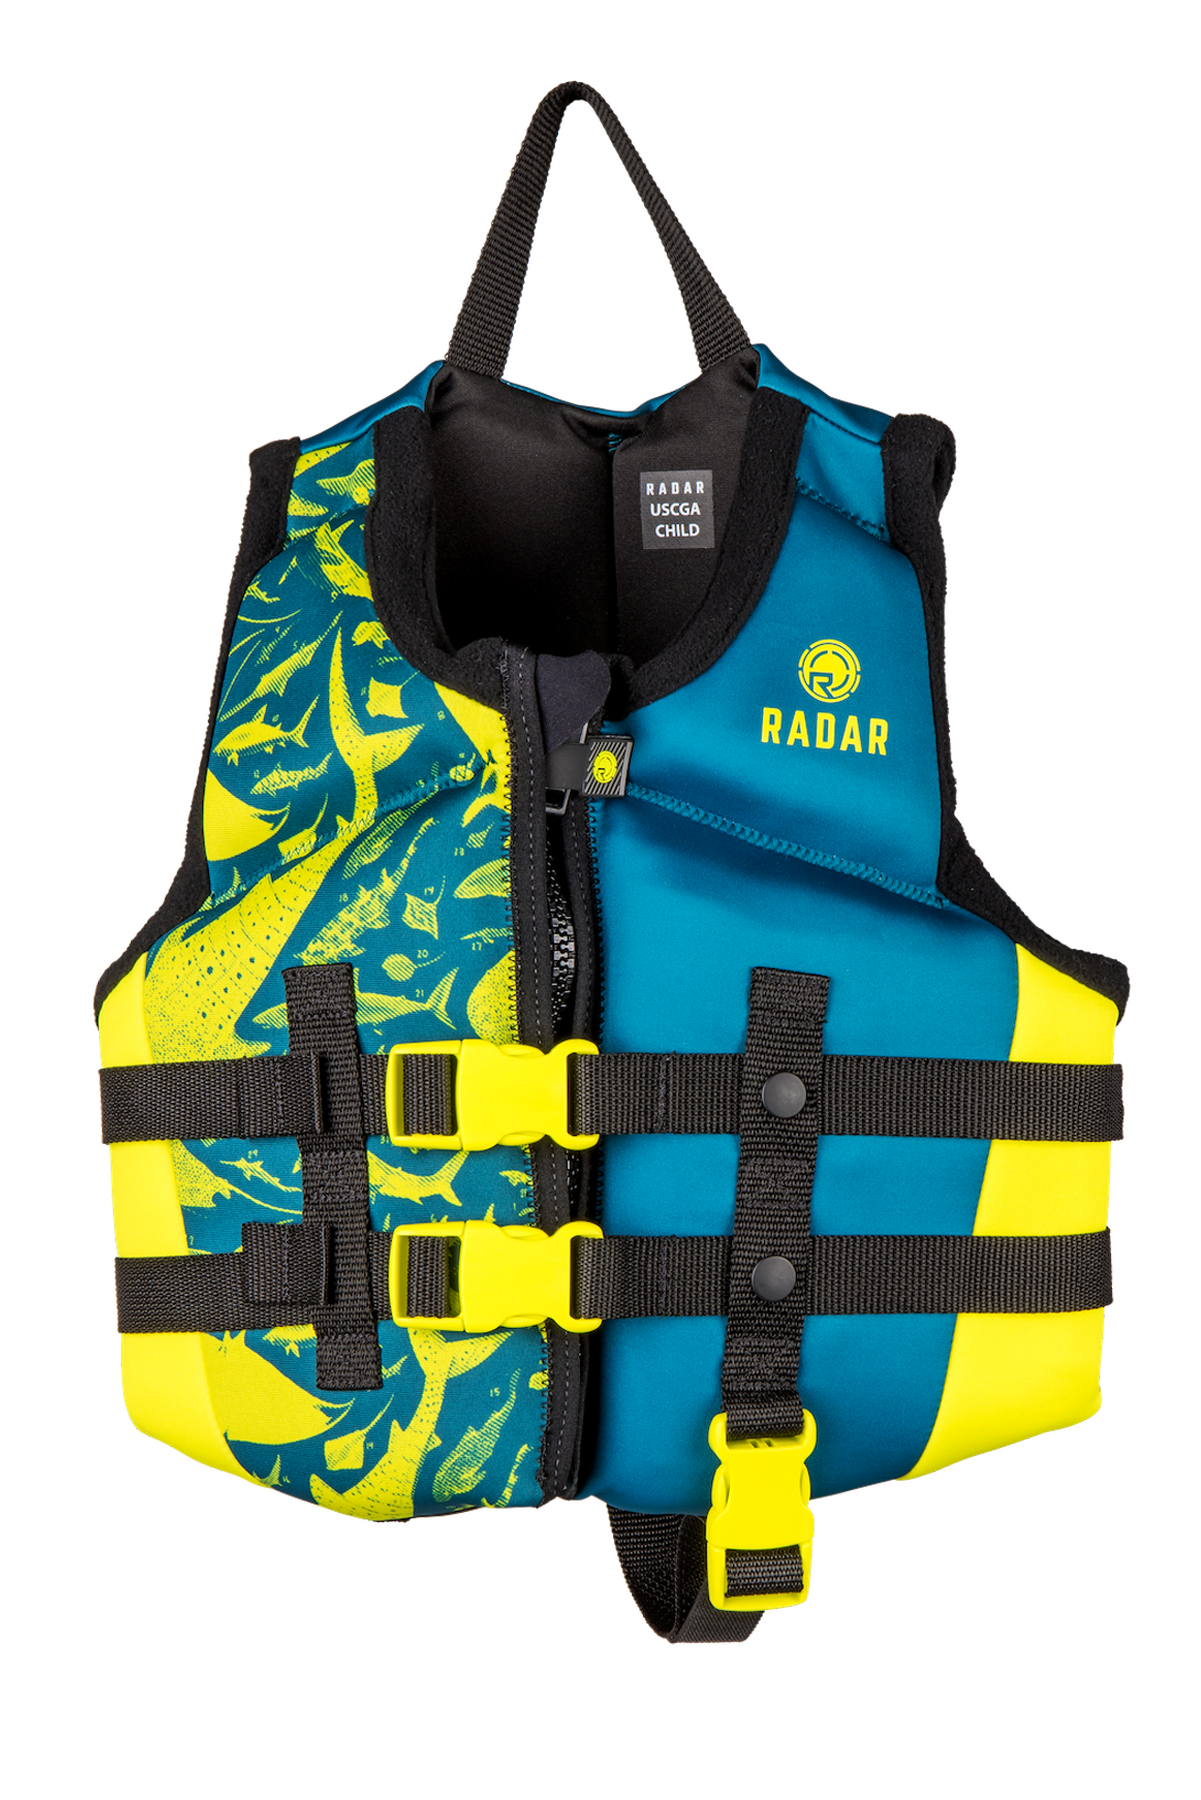 Radar T.R.A. Child Boy's CGA Life Vest